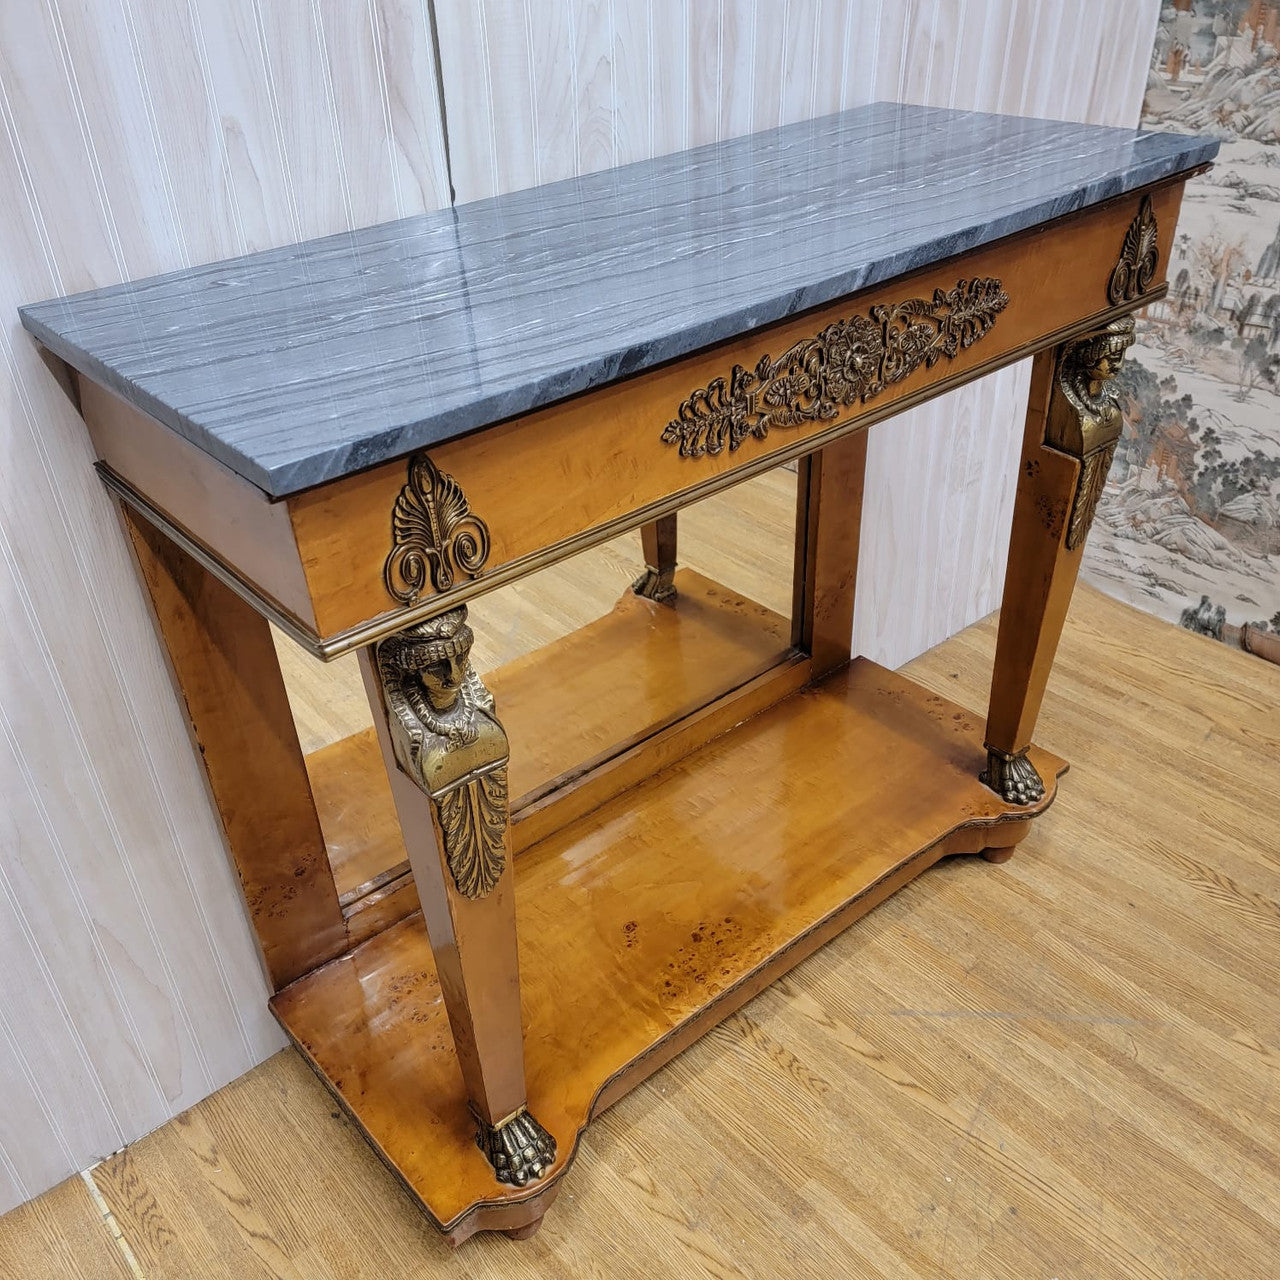 Antique Biedermeier Mirror Back Pier Console Table with 2 Marble Top Side Chests - 3 Piece Set